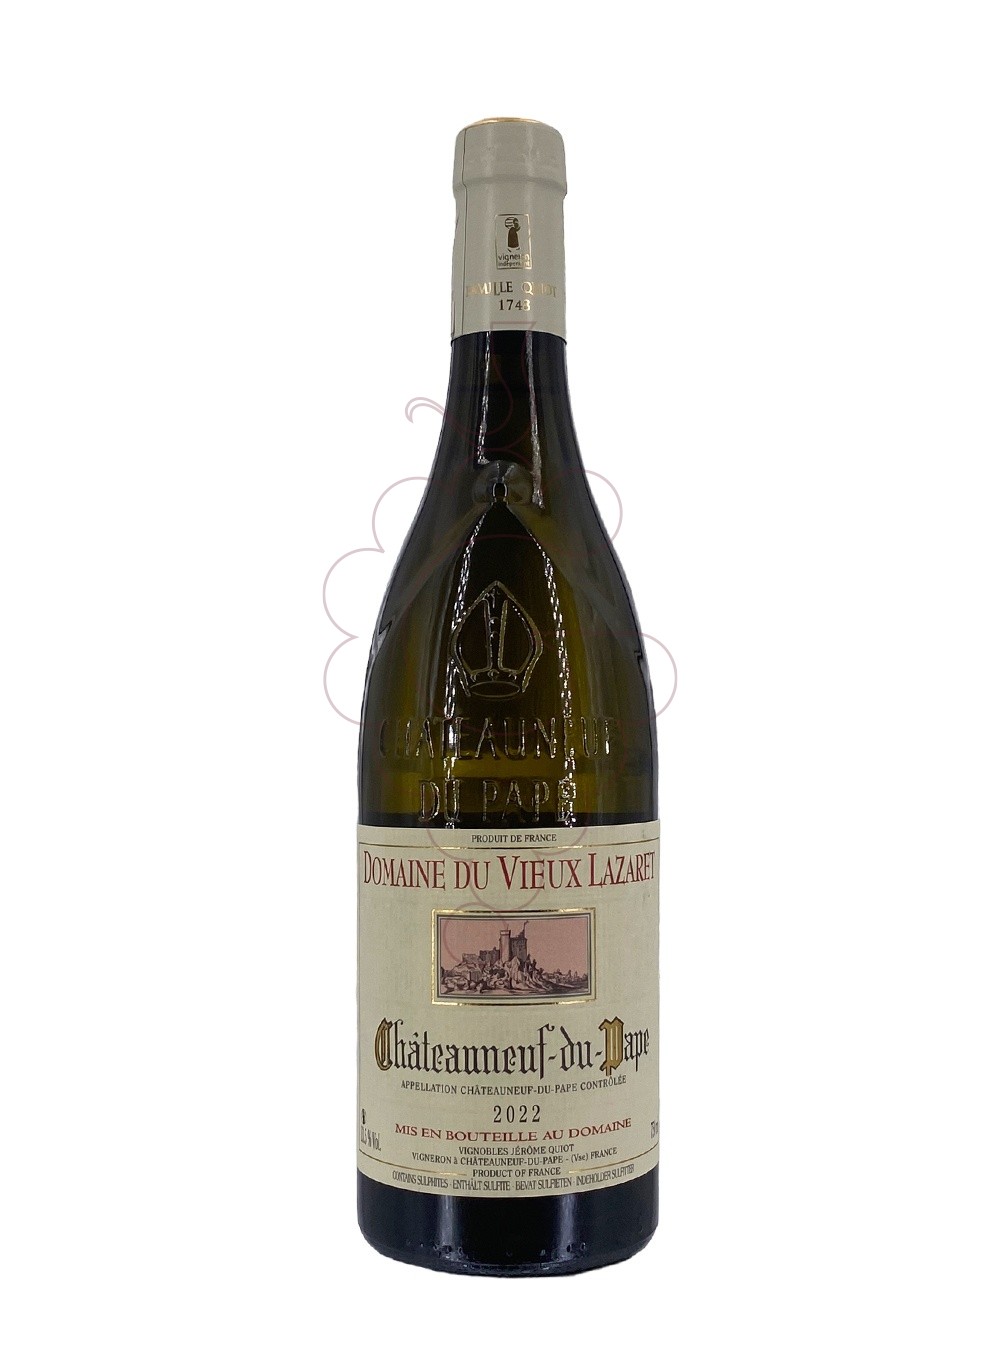 Foto Vieux lazaret chat-pape bl 22 vi blanc